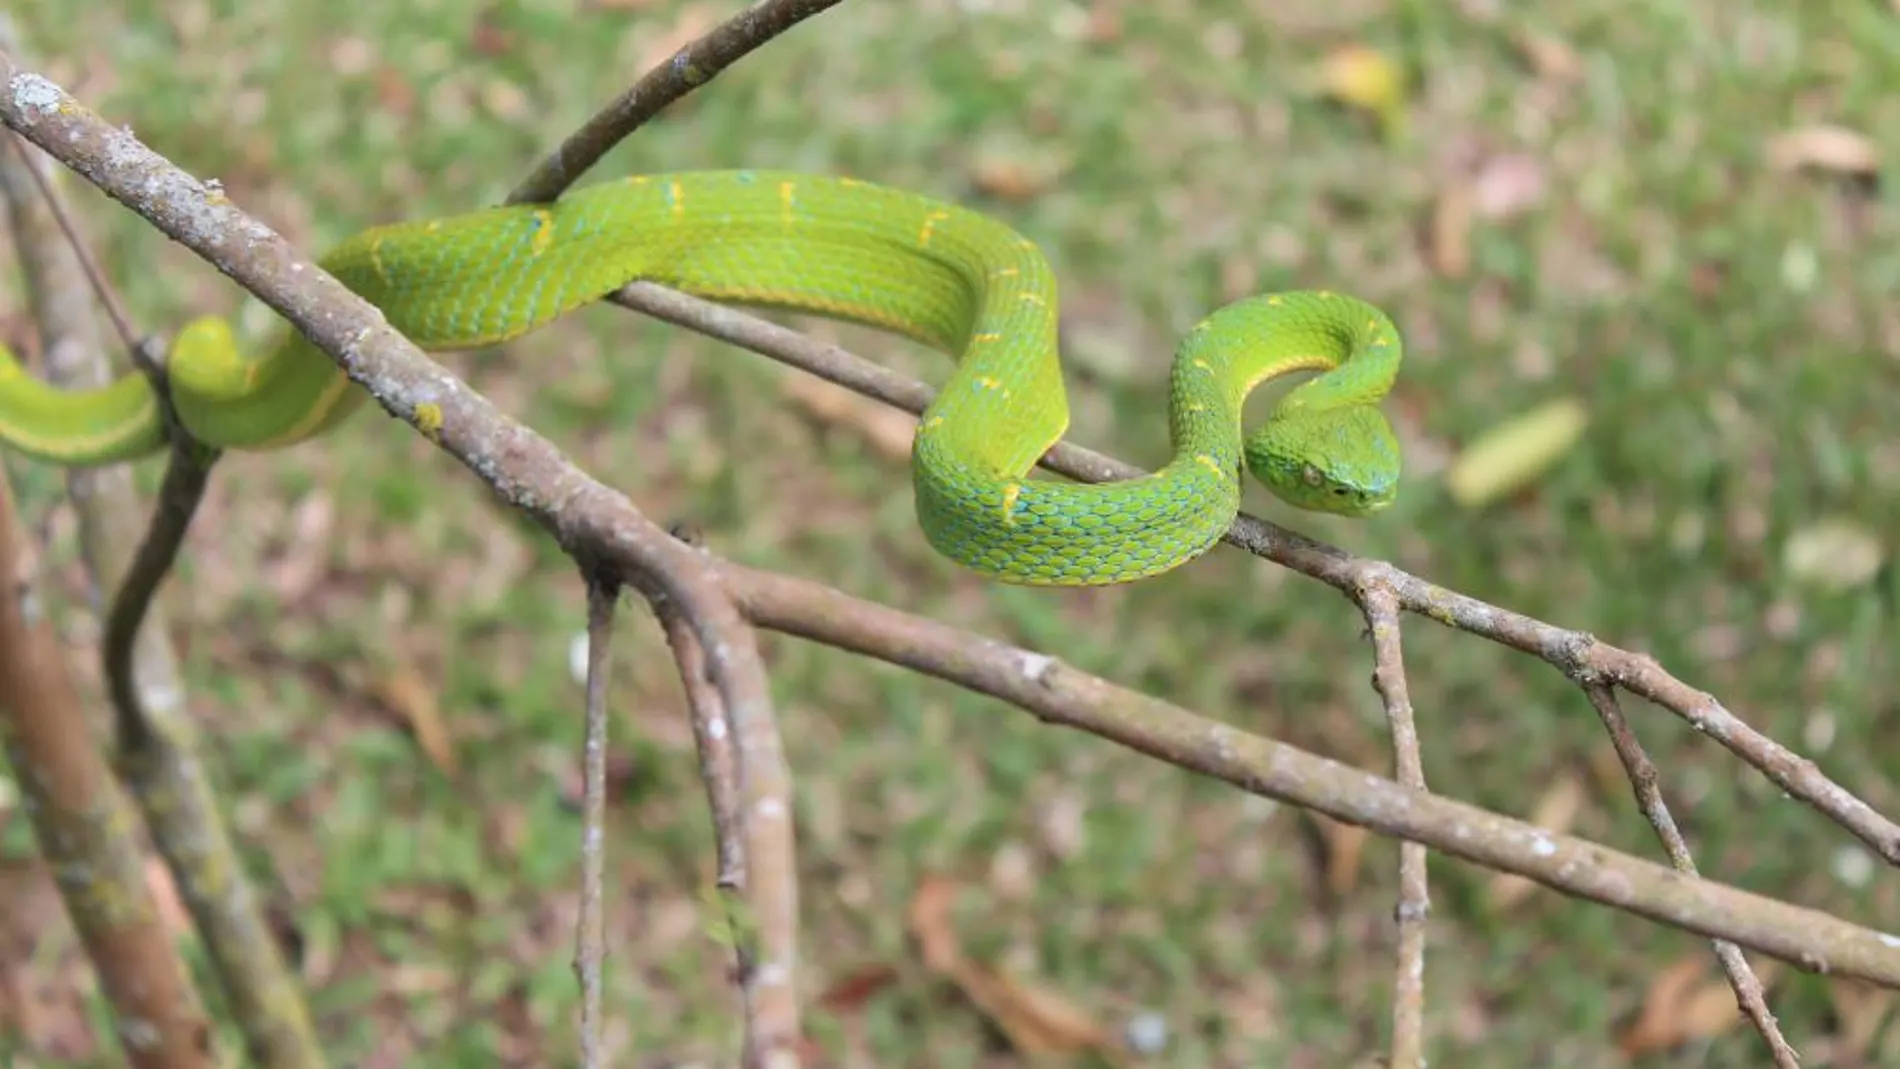 La serpiente B. lateralis